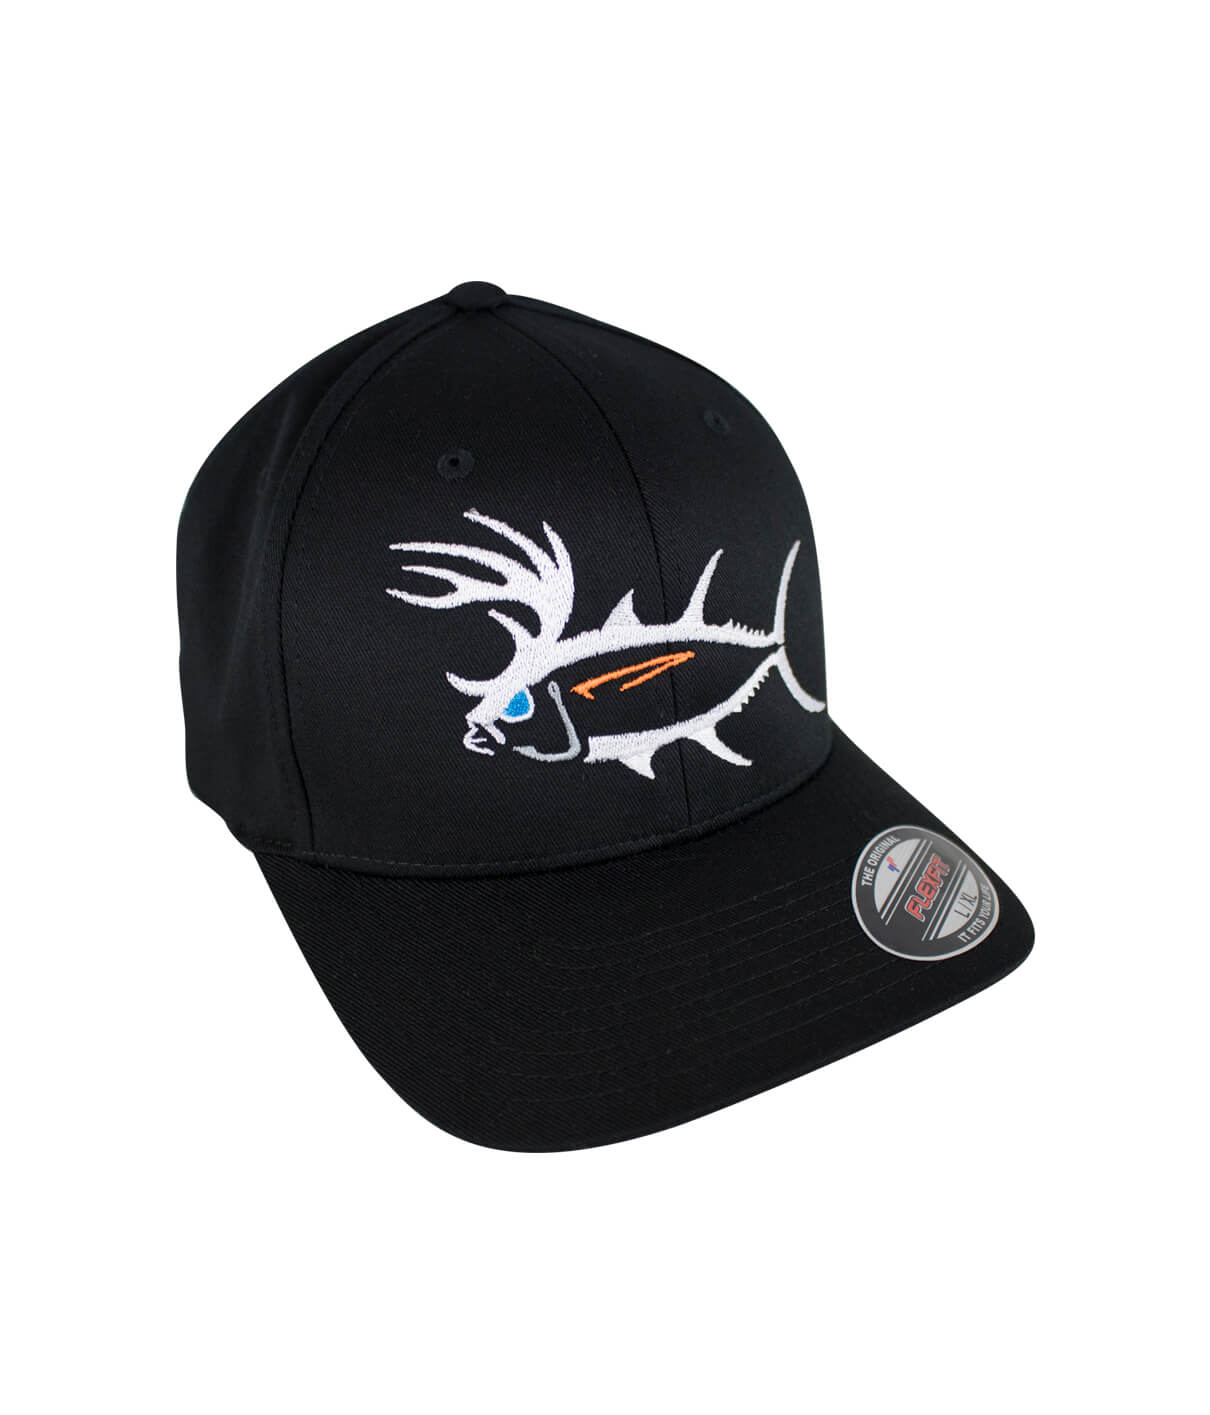 Buck-Eye Meshback Flexfit Baseball Caps | NICERIDE